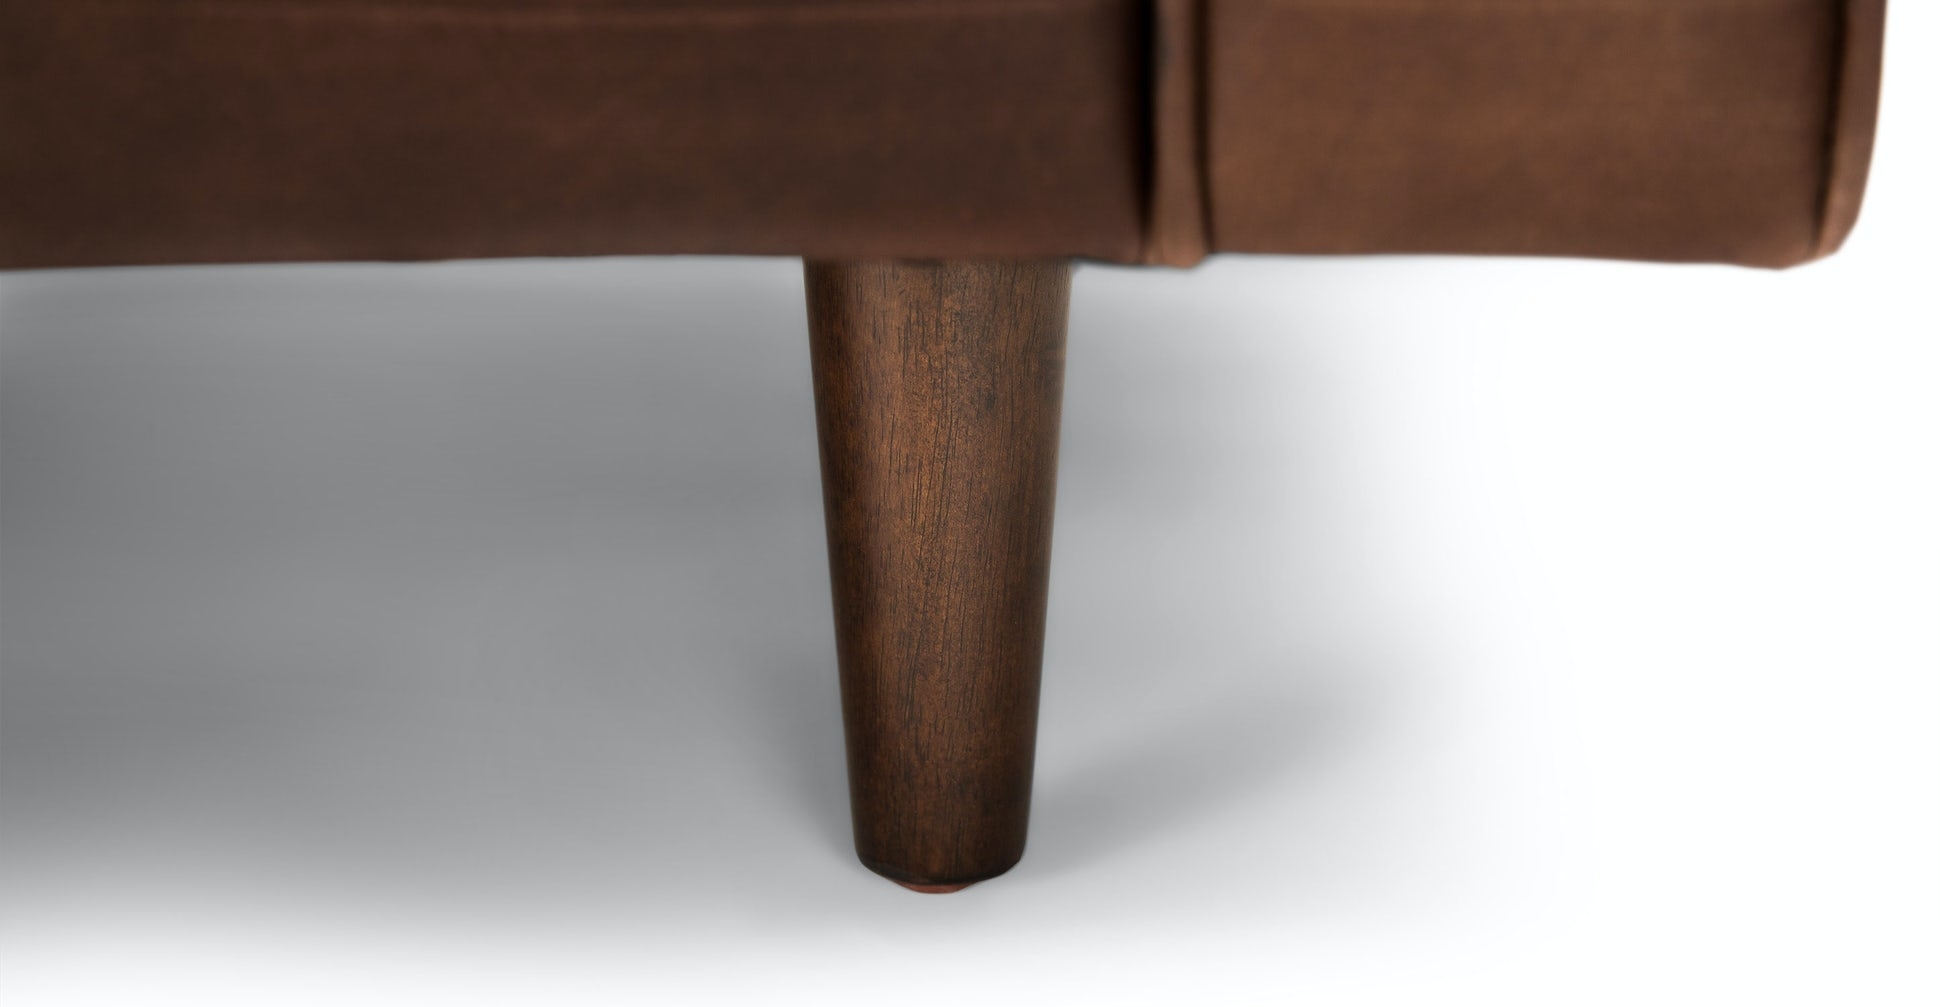 Sven 88" Tufted Leather Sofa - Charme Chocolat - Image 4